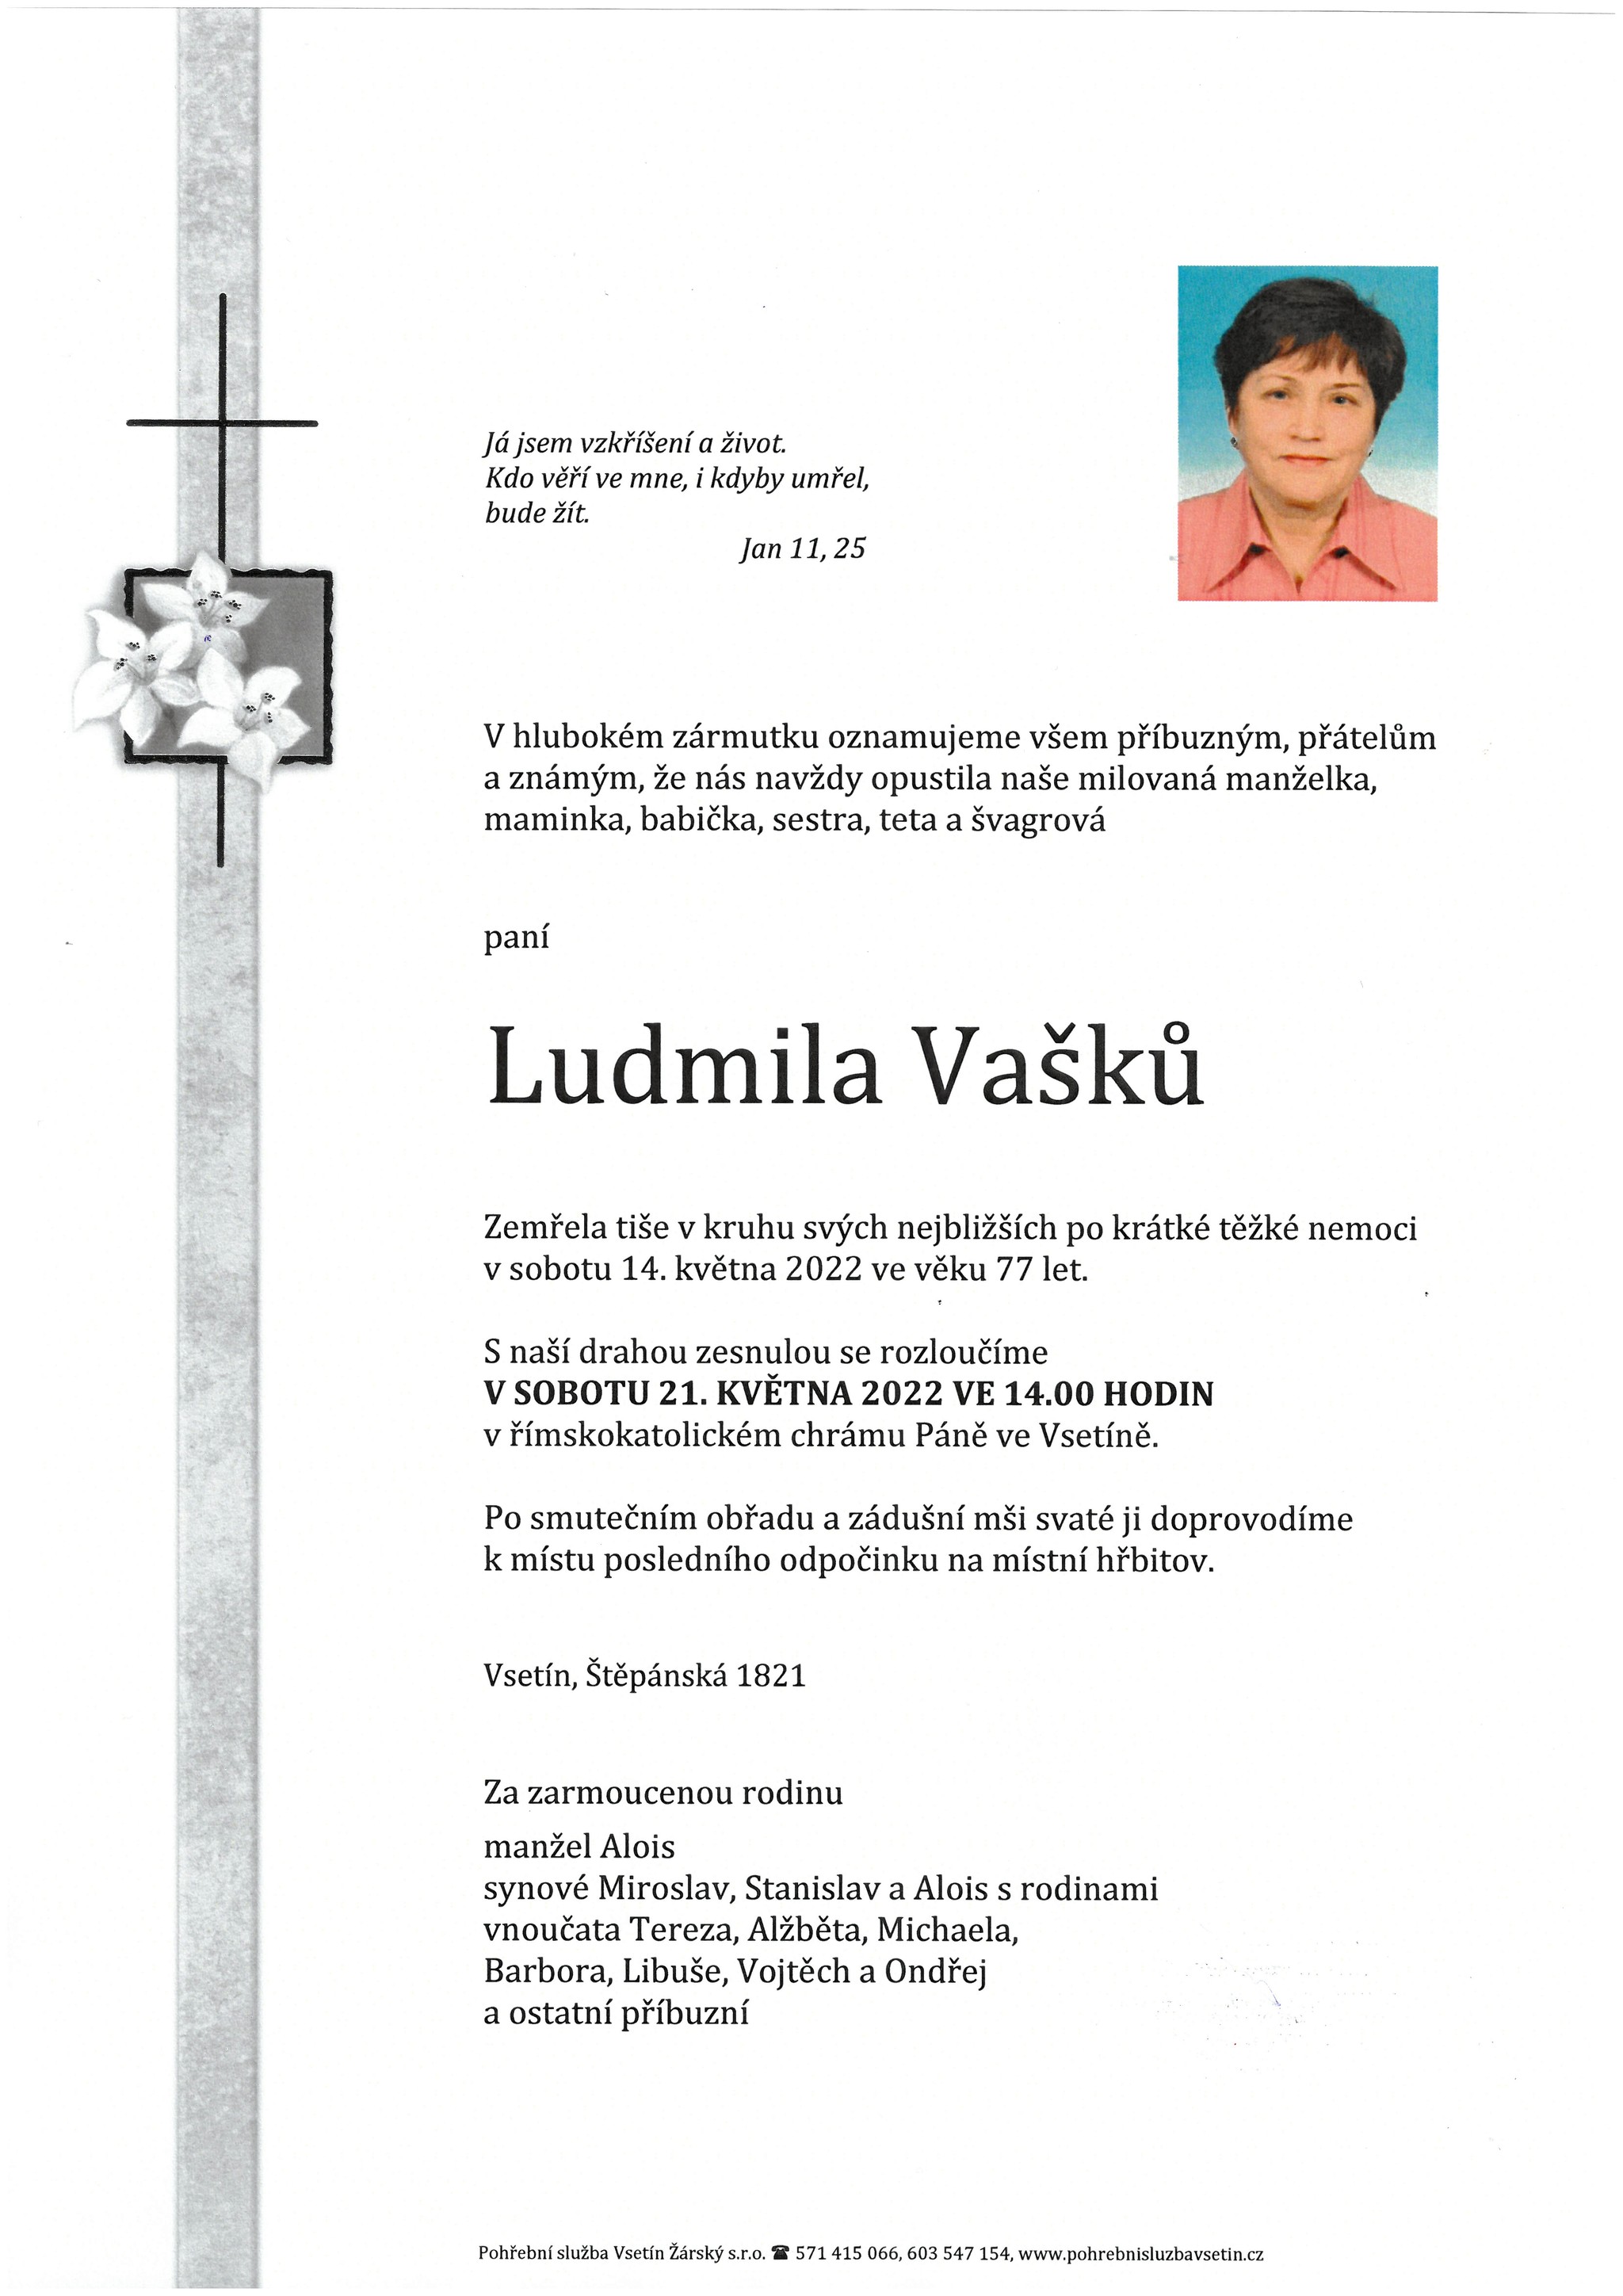 Ludmila Vašků